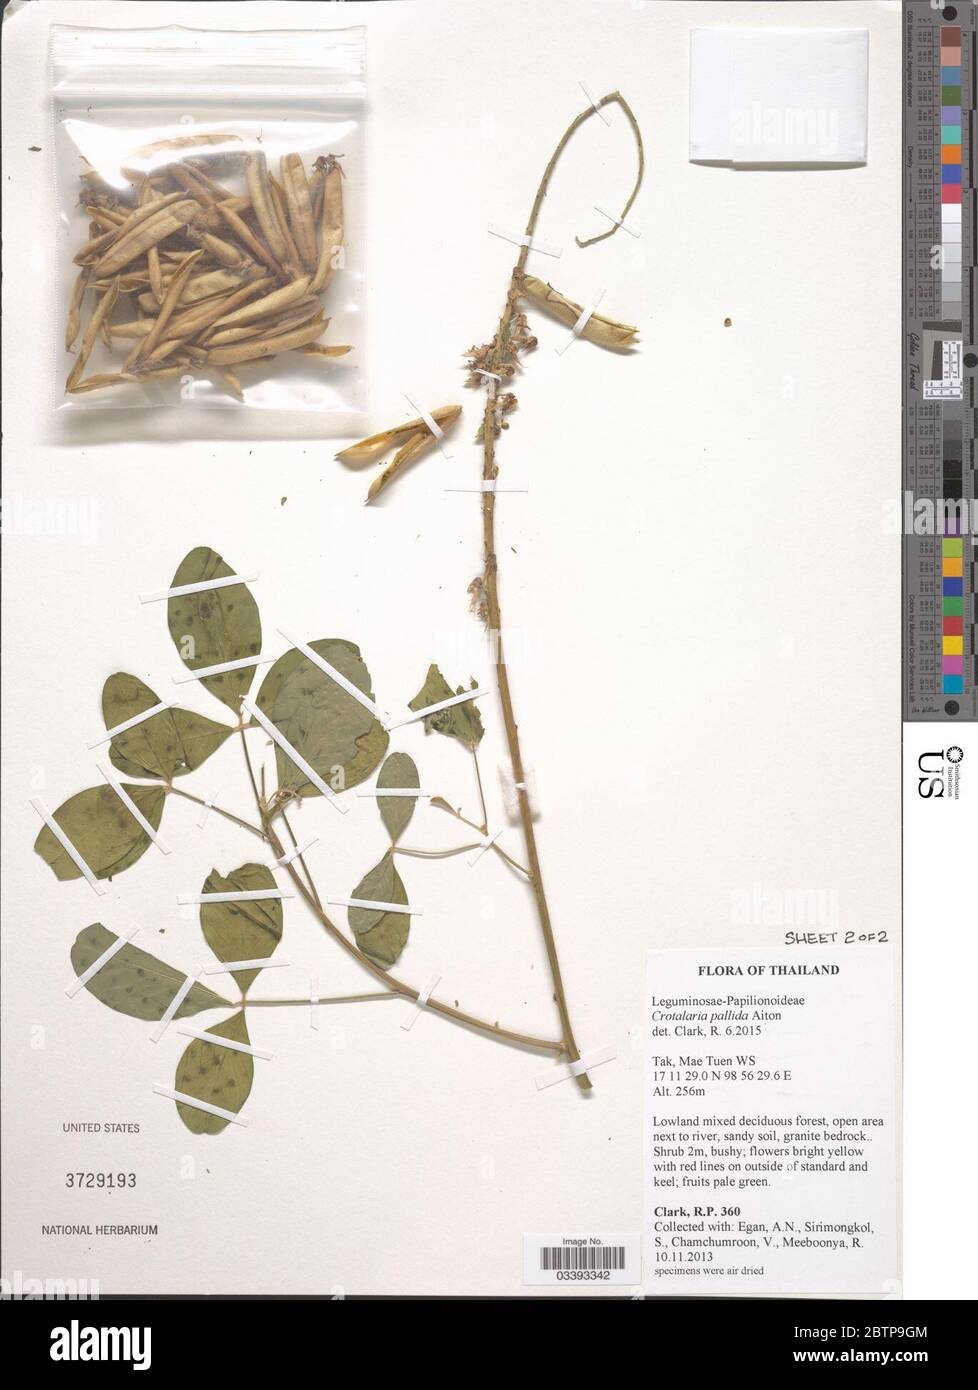 Crotalaria pallida Aiton. Stock Photo